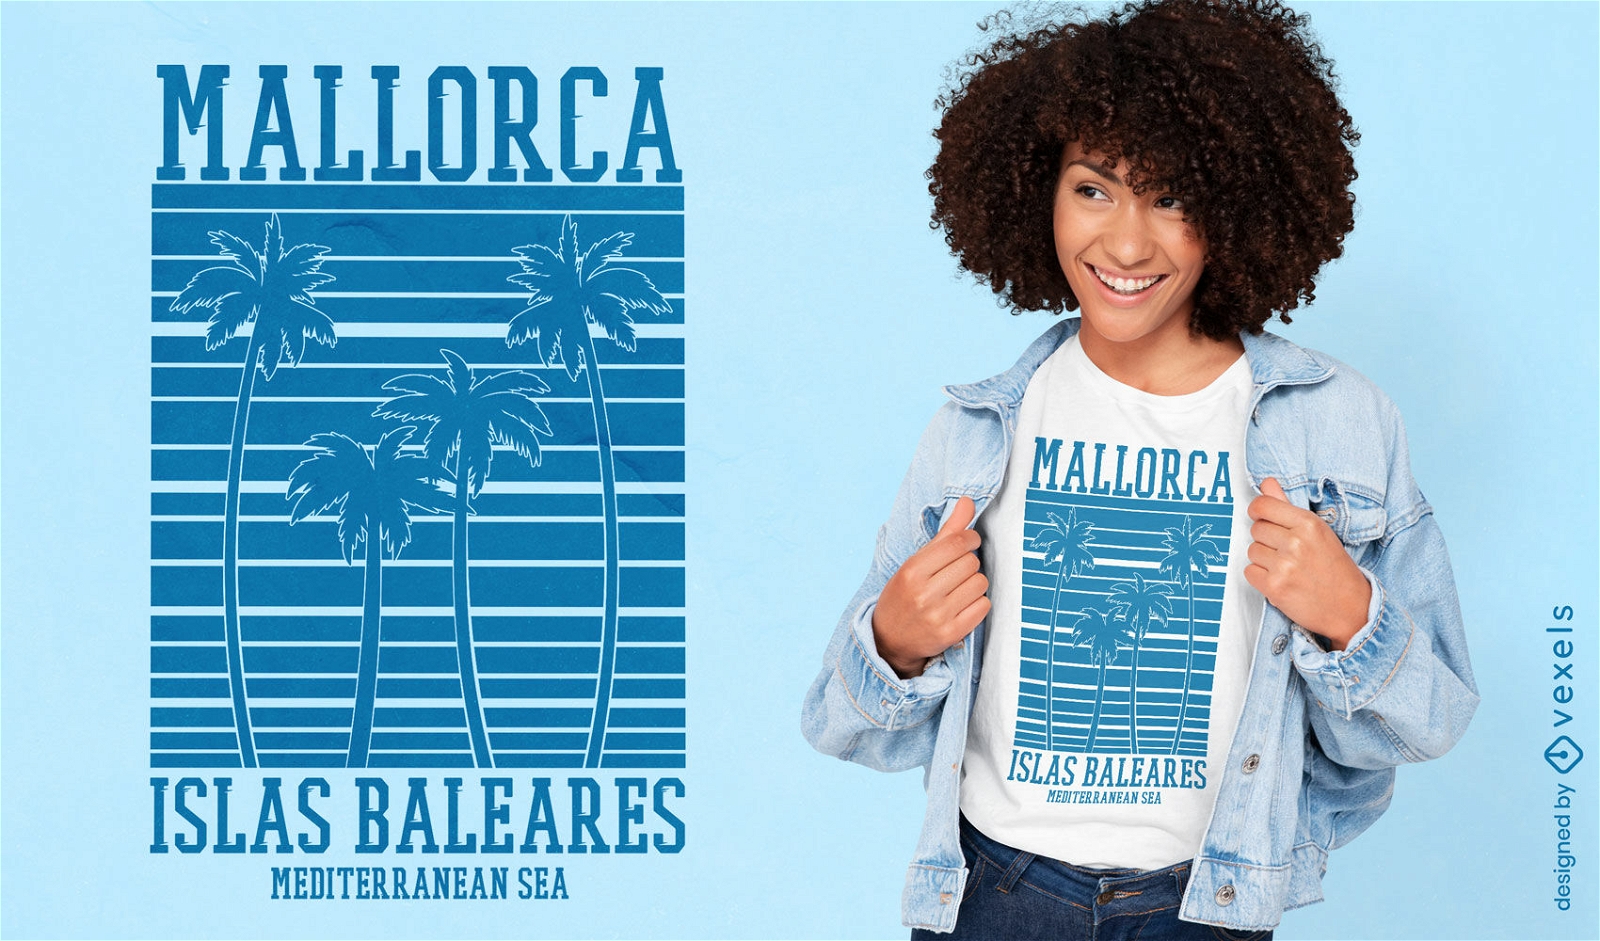 Mallorca Islas Baleares t-shirt design